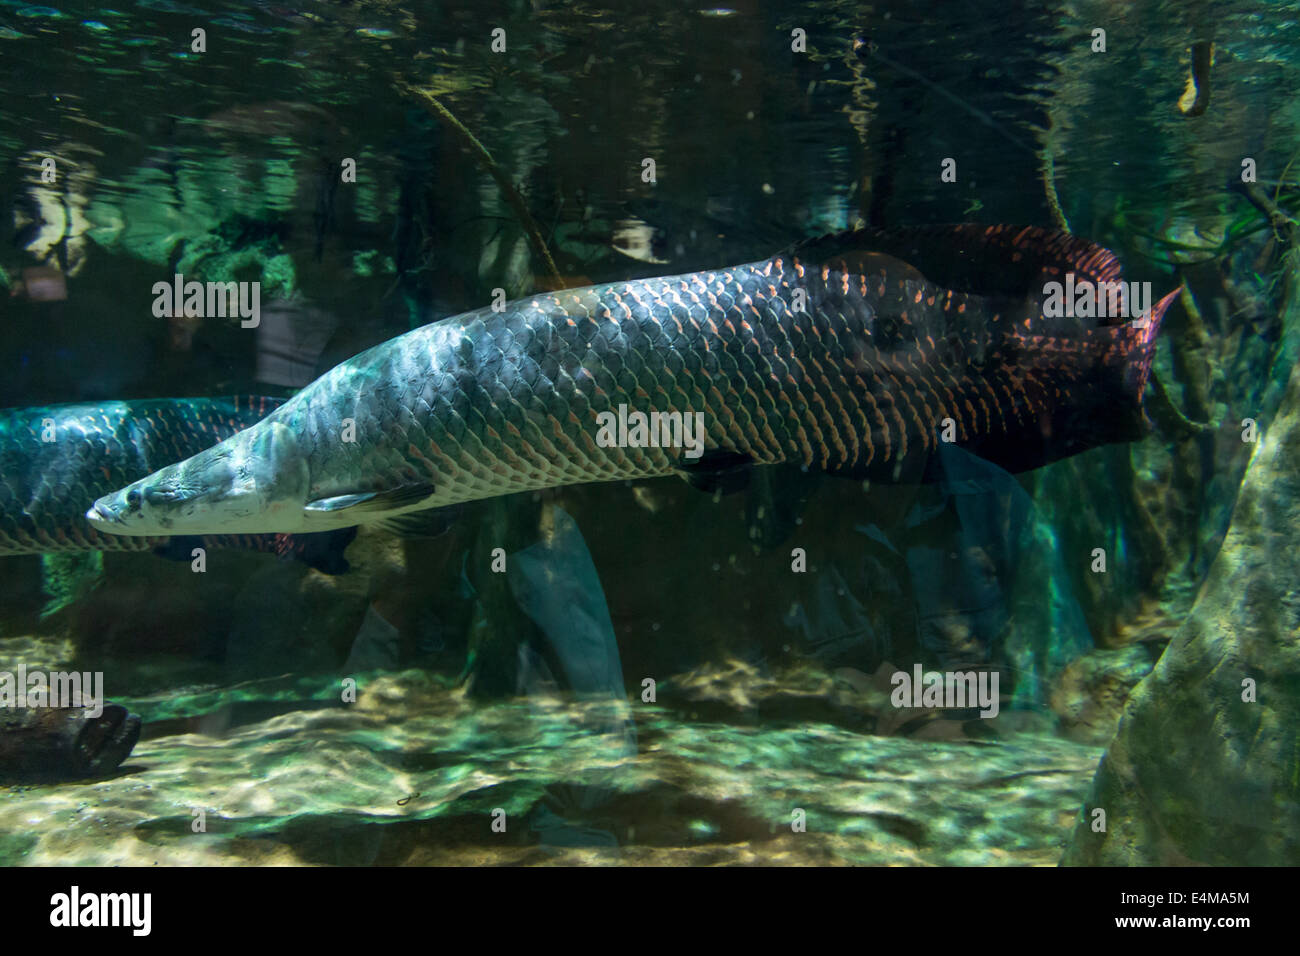 Arapaima fish -Fotos und -Bildmaterial in hoher Auflösung – Alamy